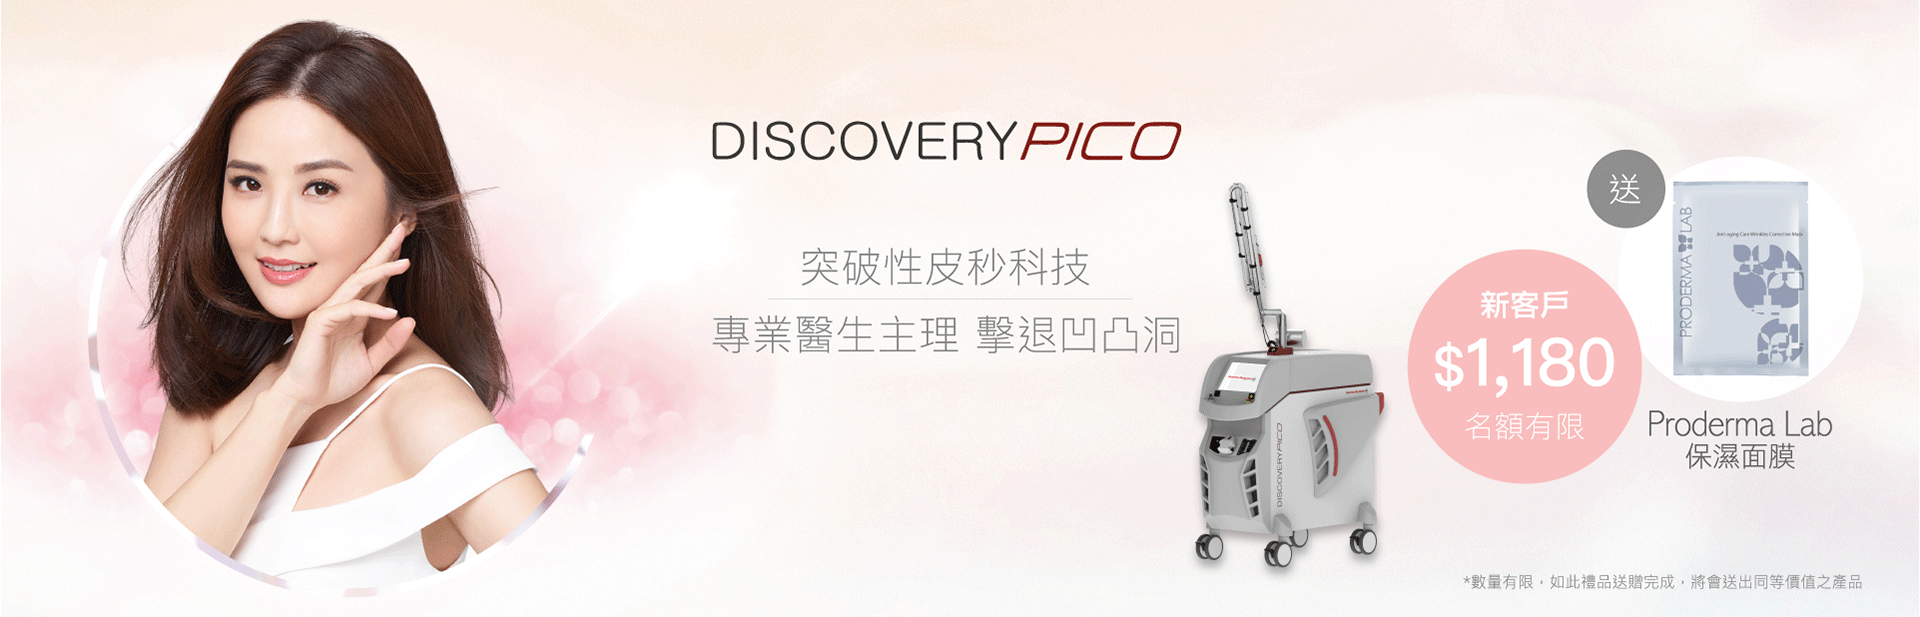 Discovery Pico 价钱